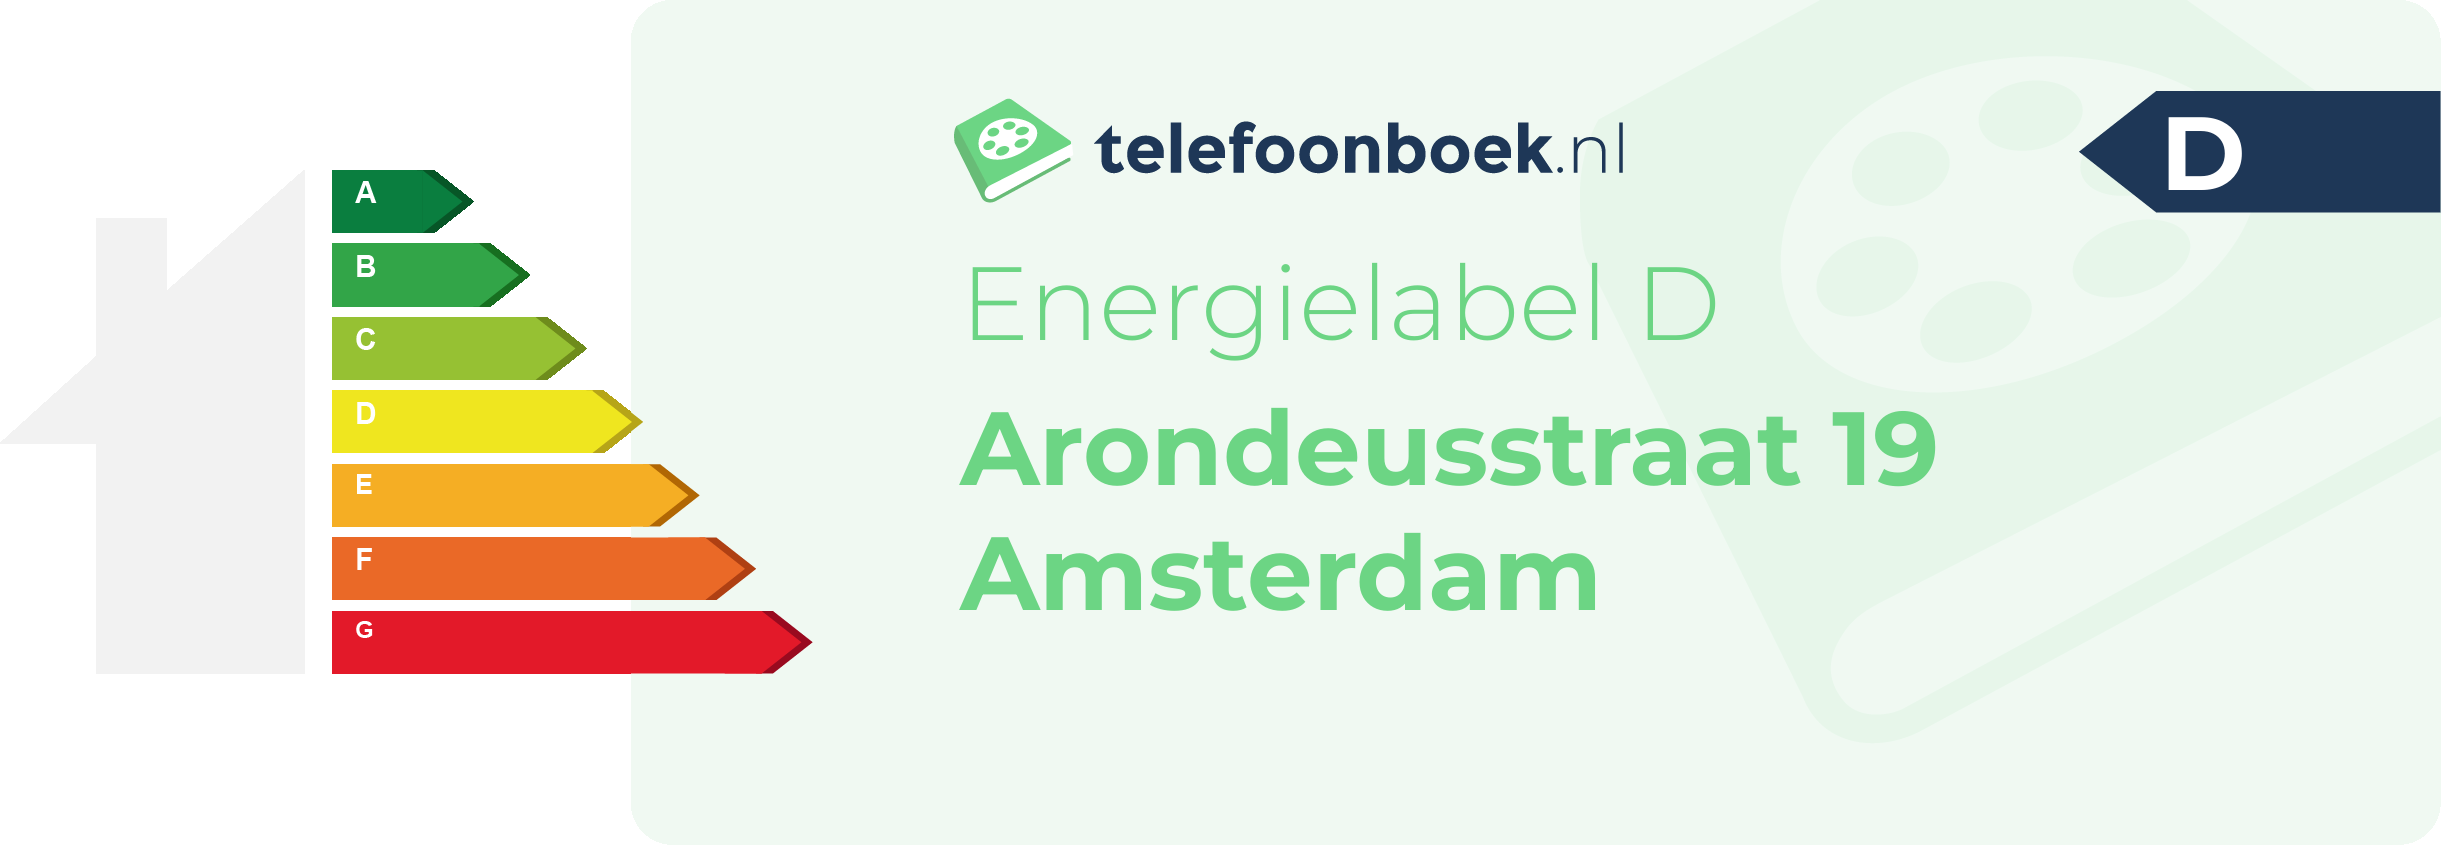 Energielabel Arondeusstraat 19 Amsterdam